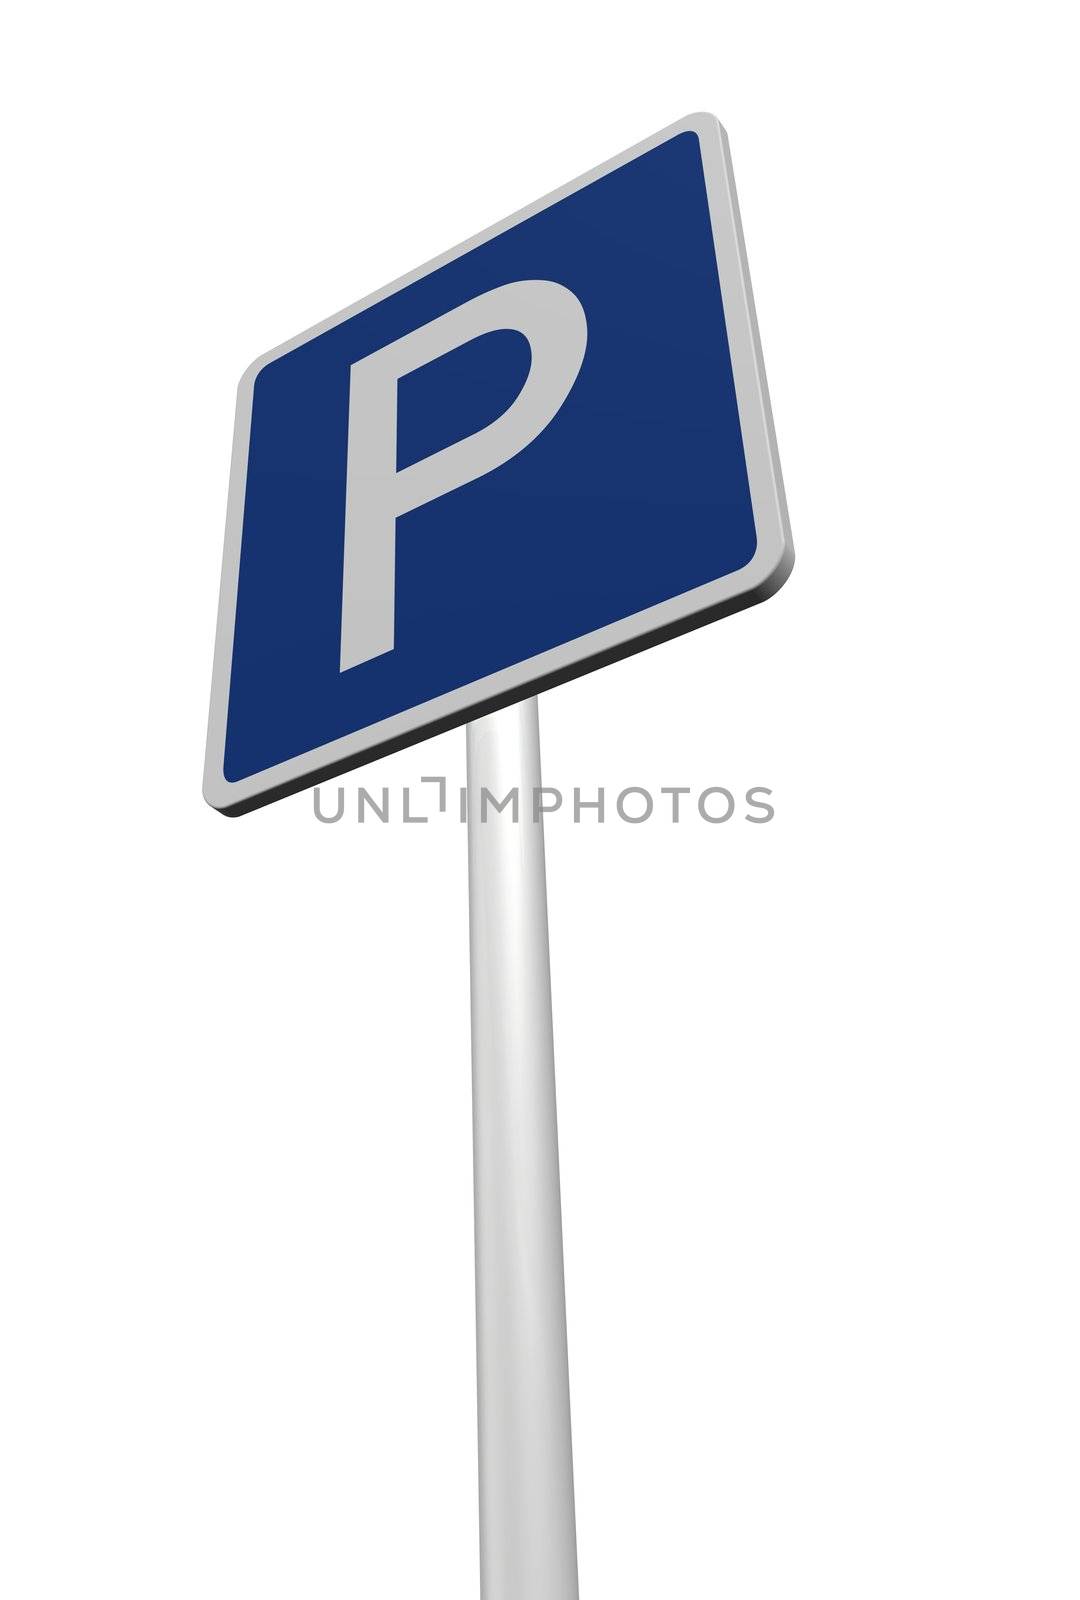 parking allowed - roadsign on white background - 3d illustration